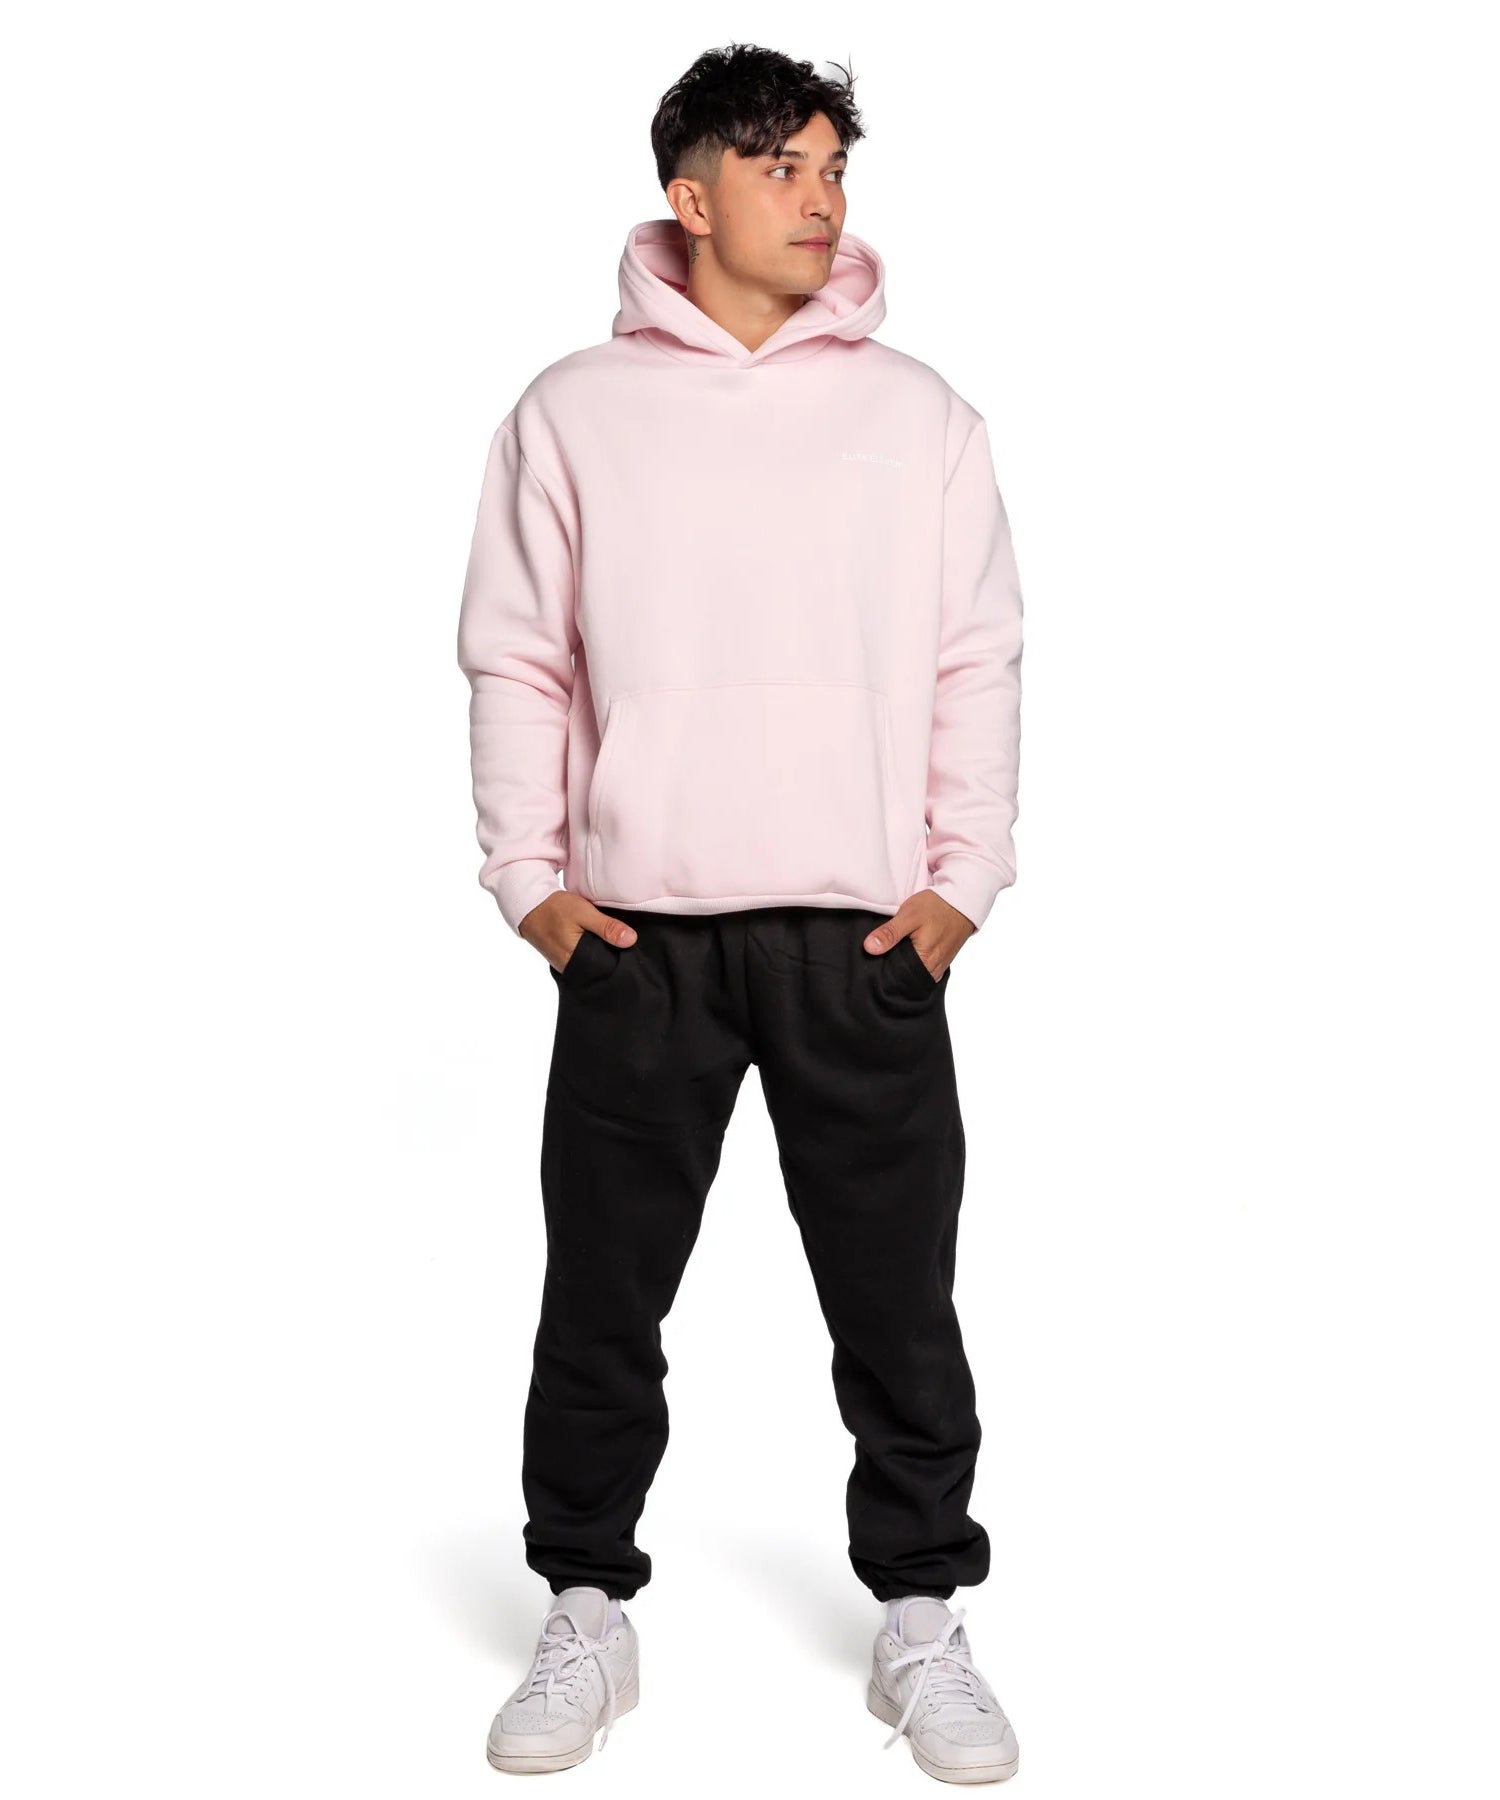 Premium Plain Cotton Baby Pink or Soft Pink Hoodie/Sweatshirt